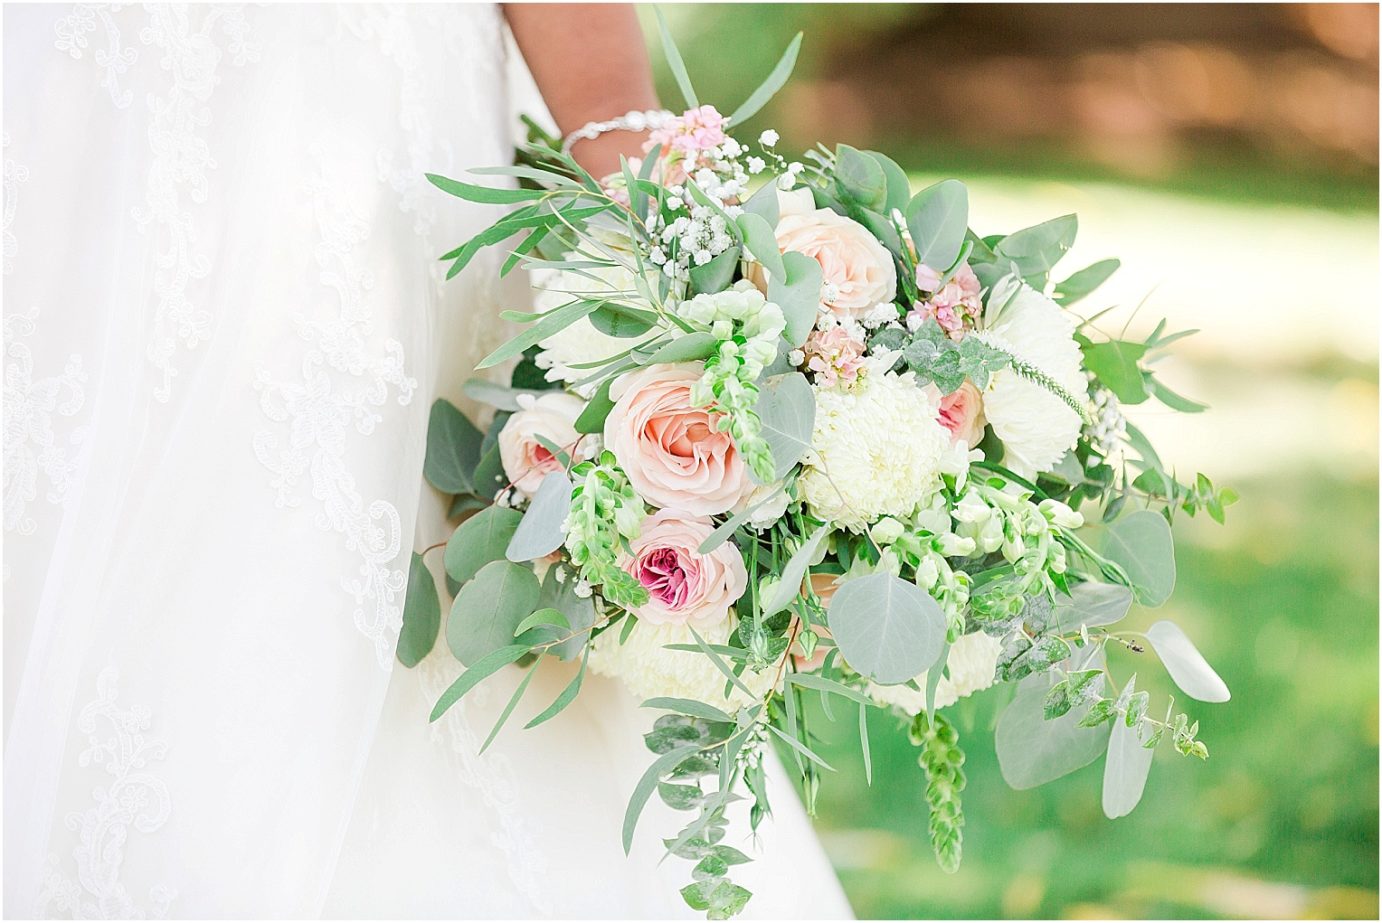 Favorite wedding florals of 2018 for brides flowing blush and beige wedding bouquet